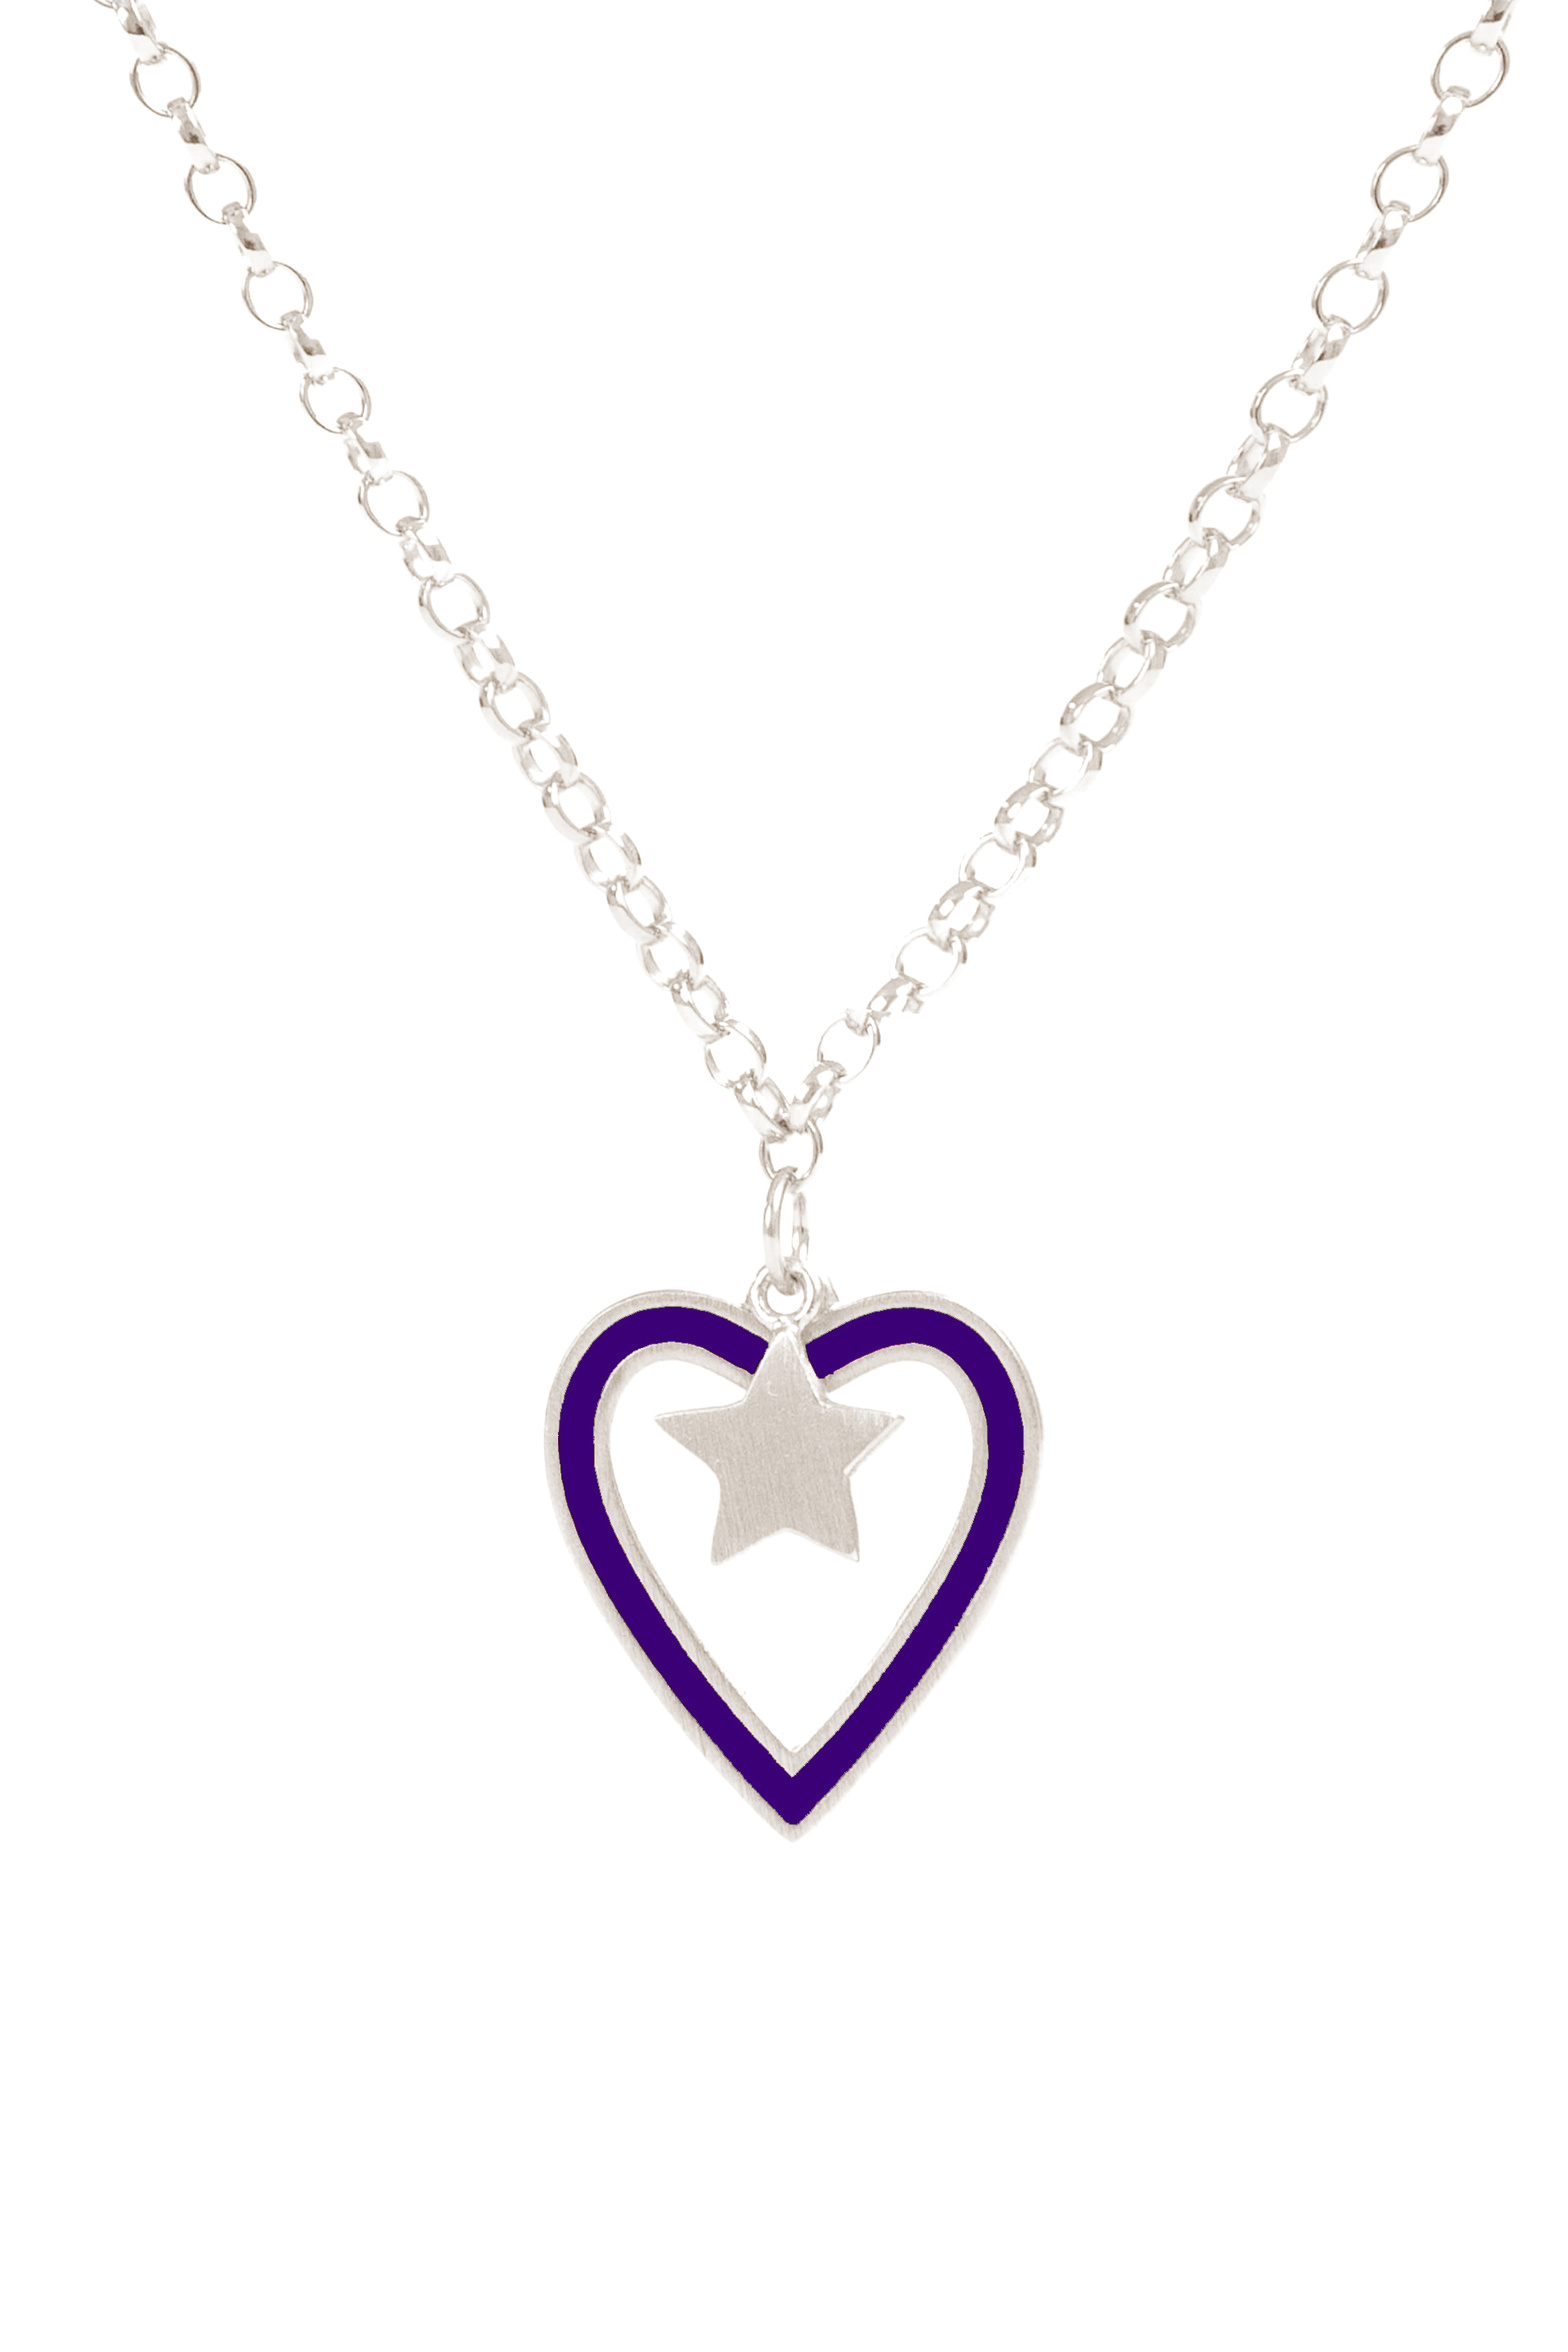 cb468_heart-necklace_silver_with_indigo_edit_resized.jpg